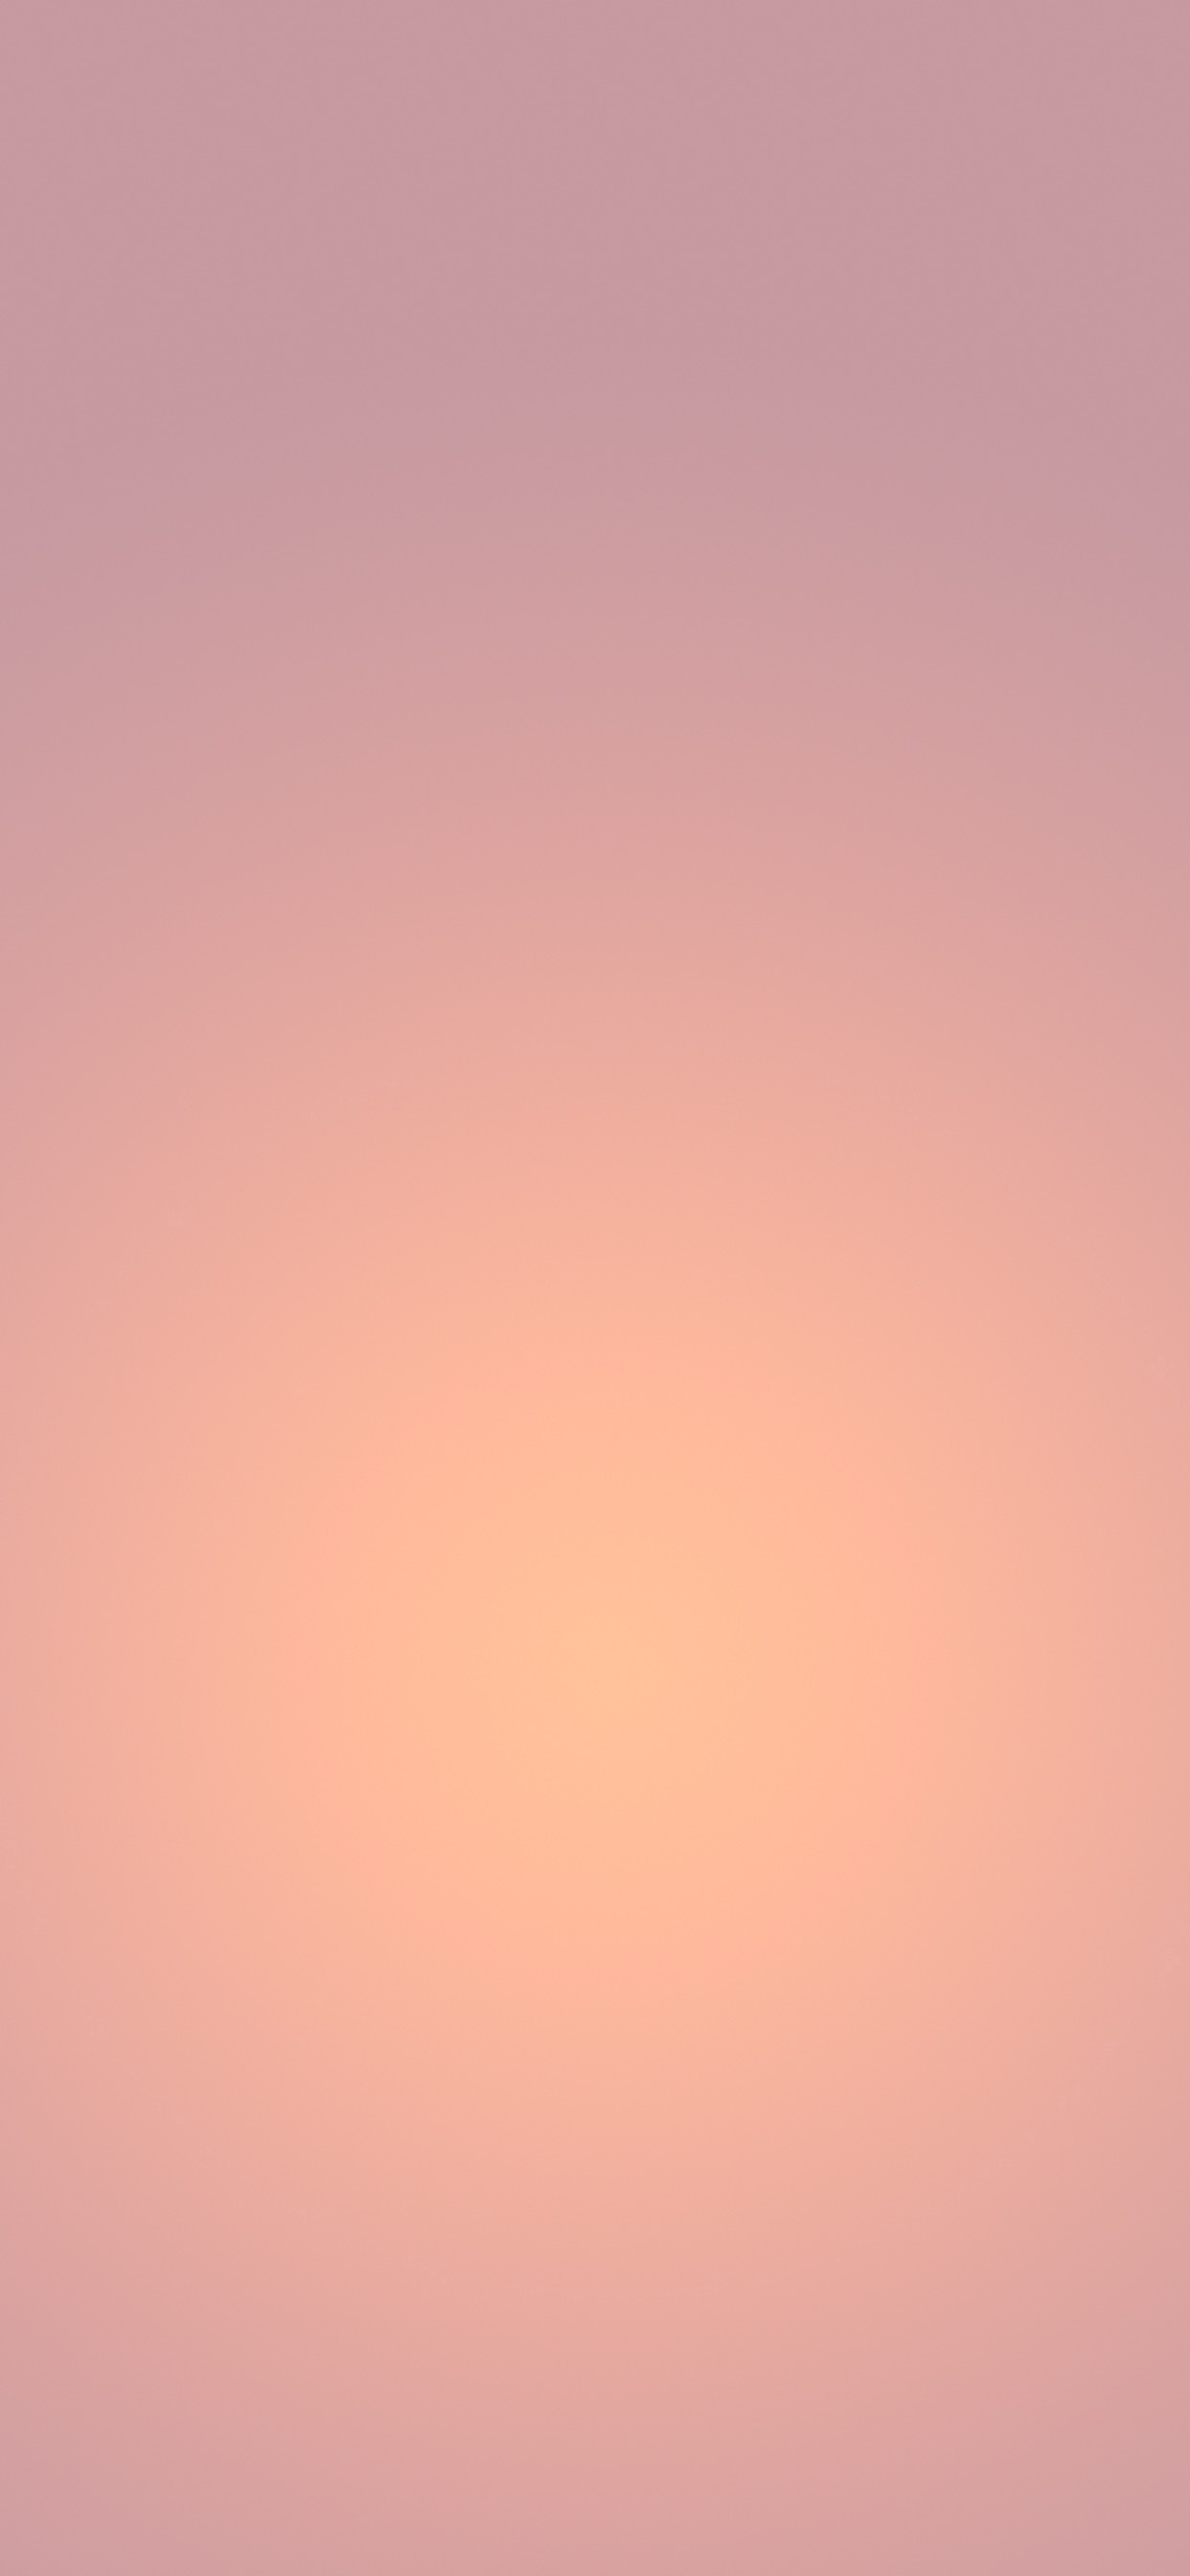 Simple gradient wallpaper for iPhone